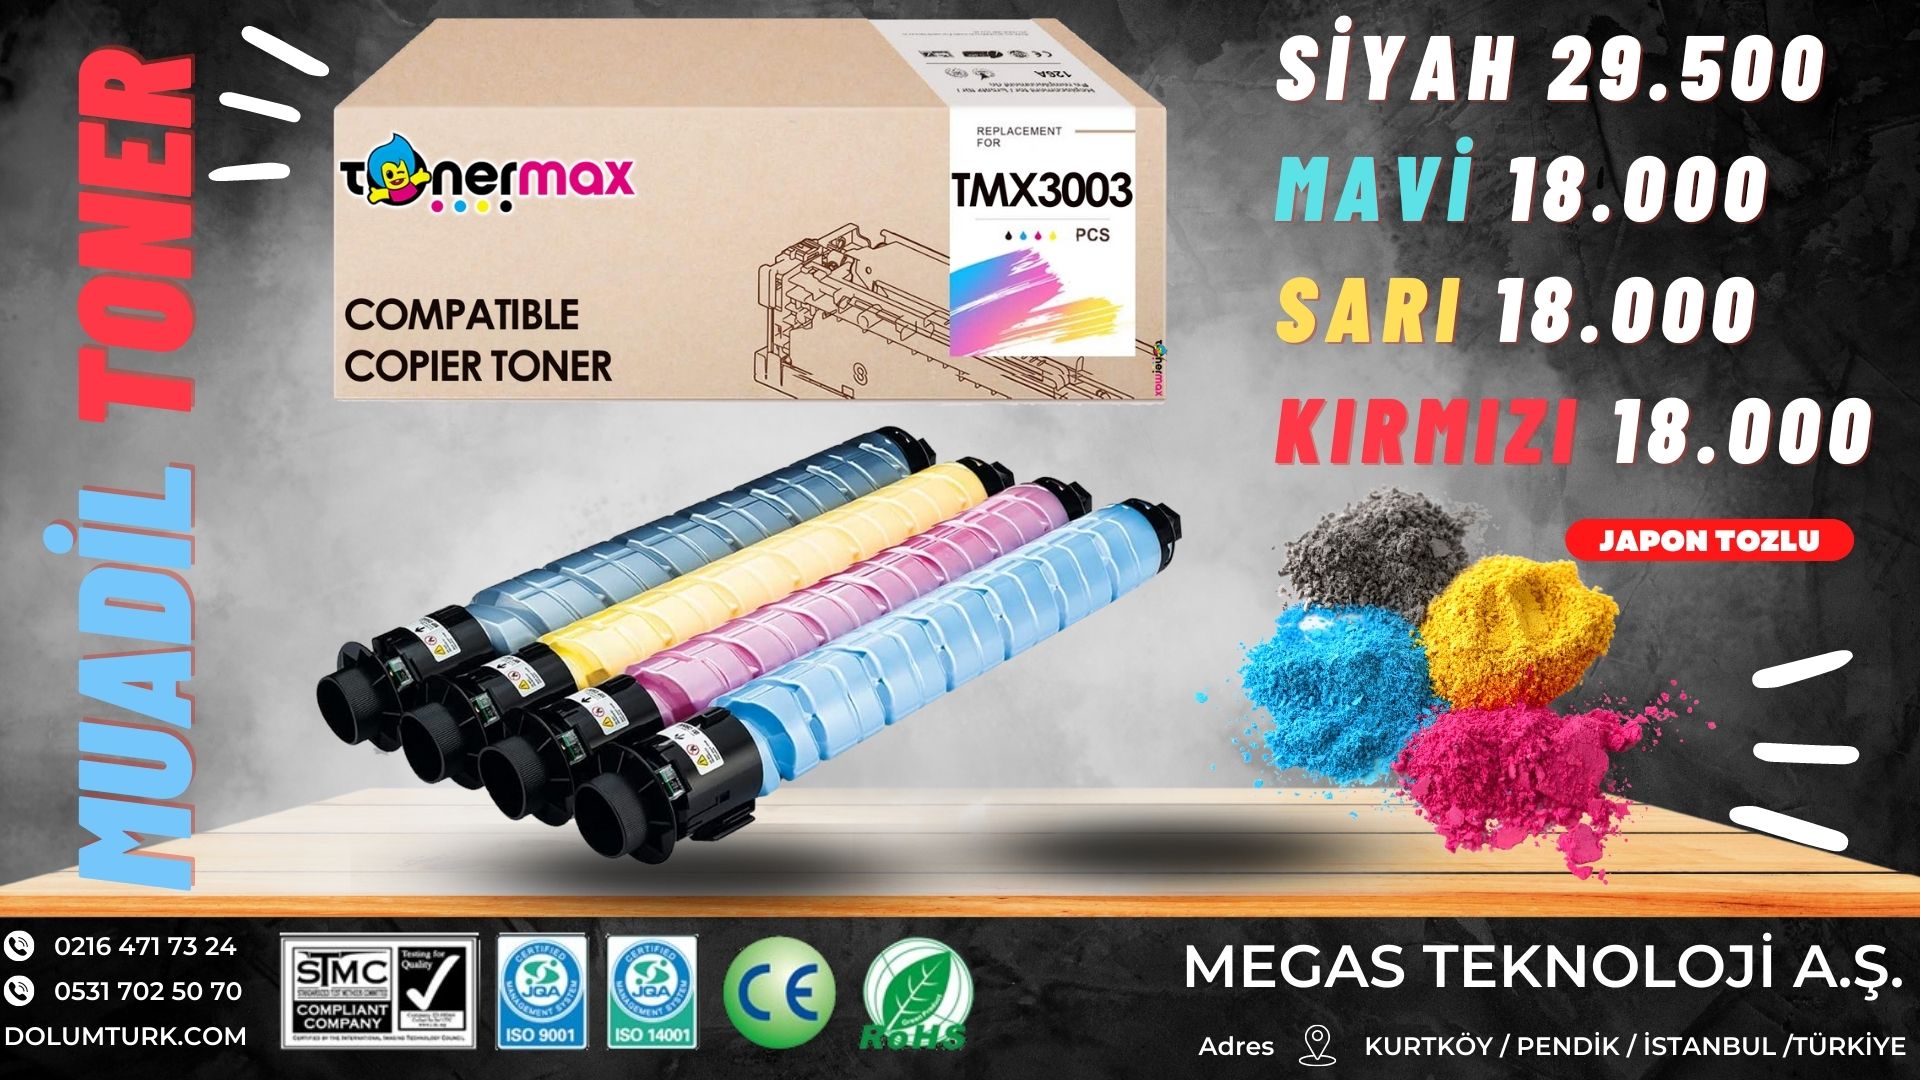 Tonermax MPC3003 Muadil toner